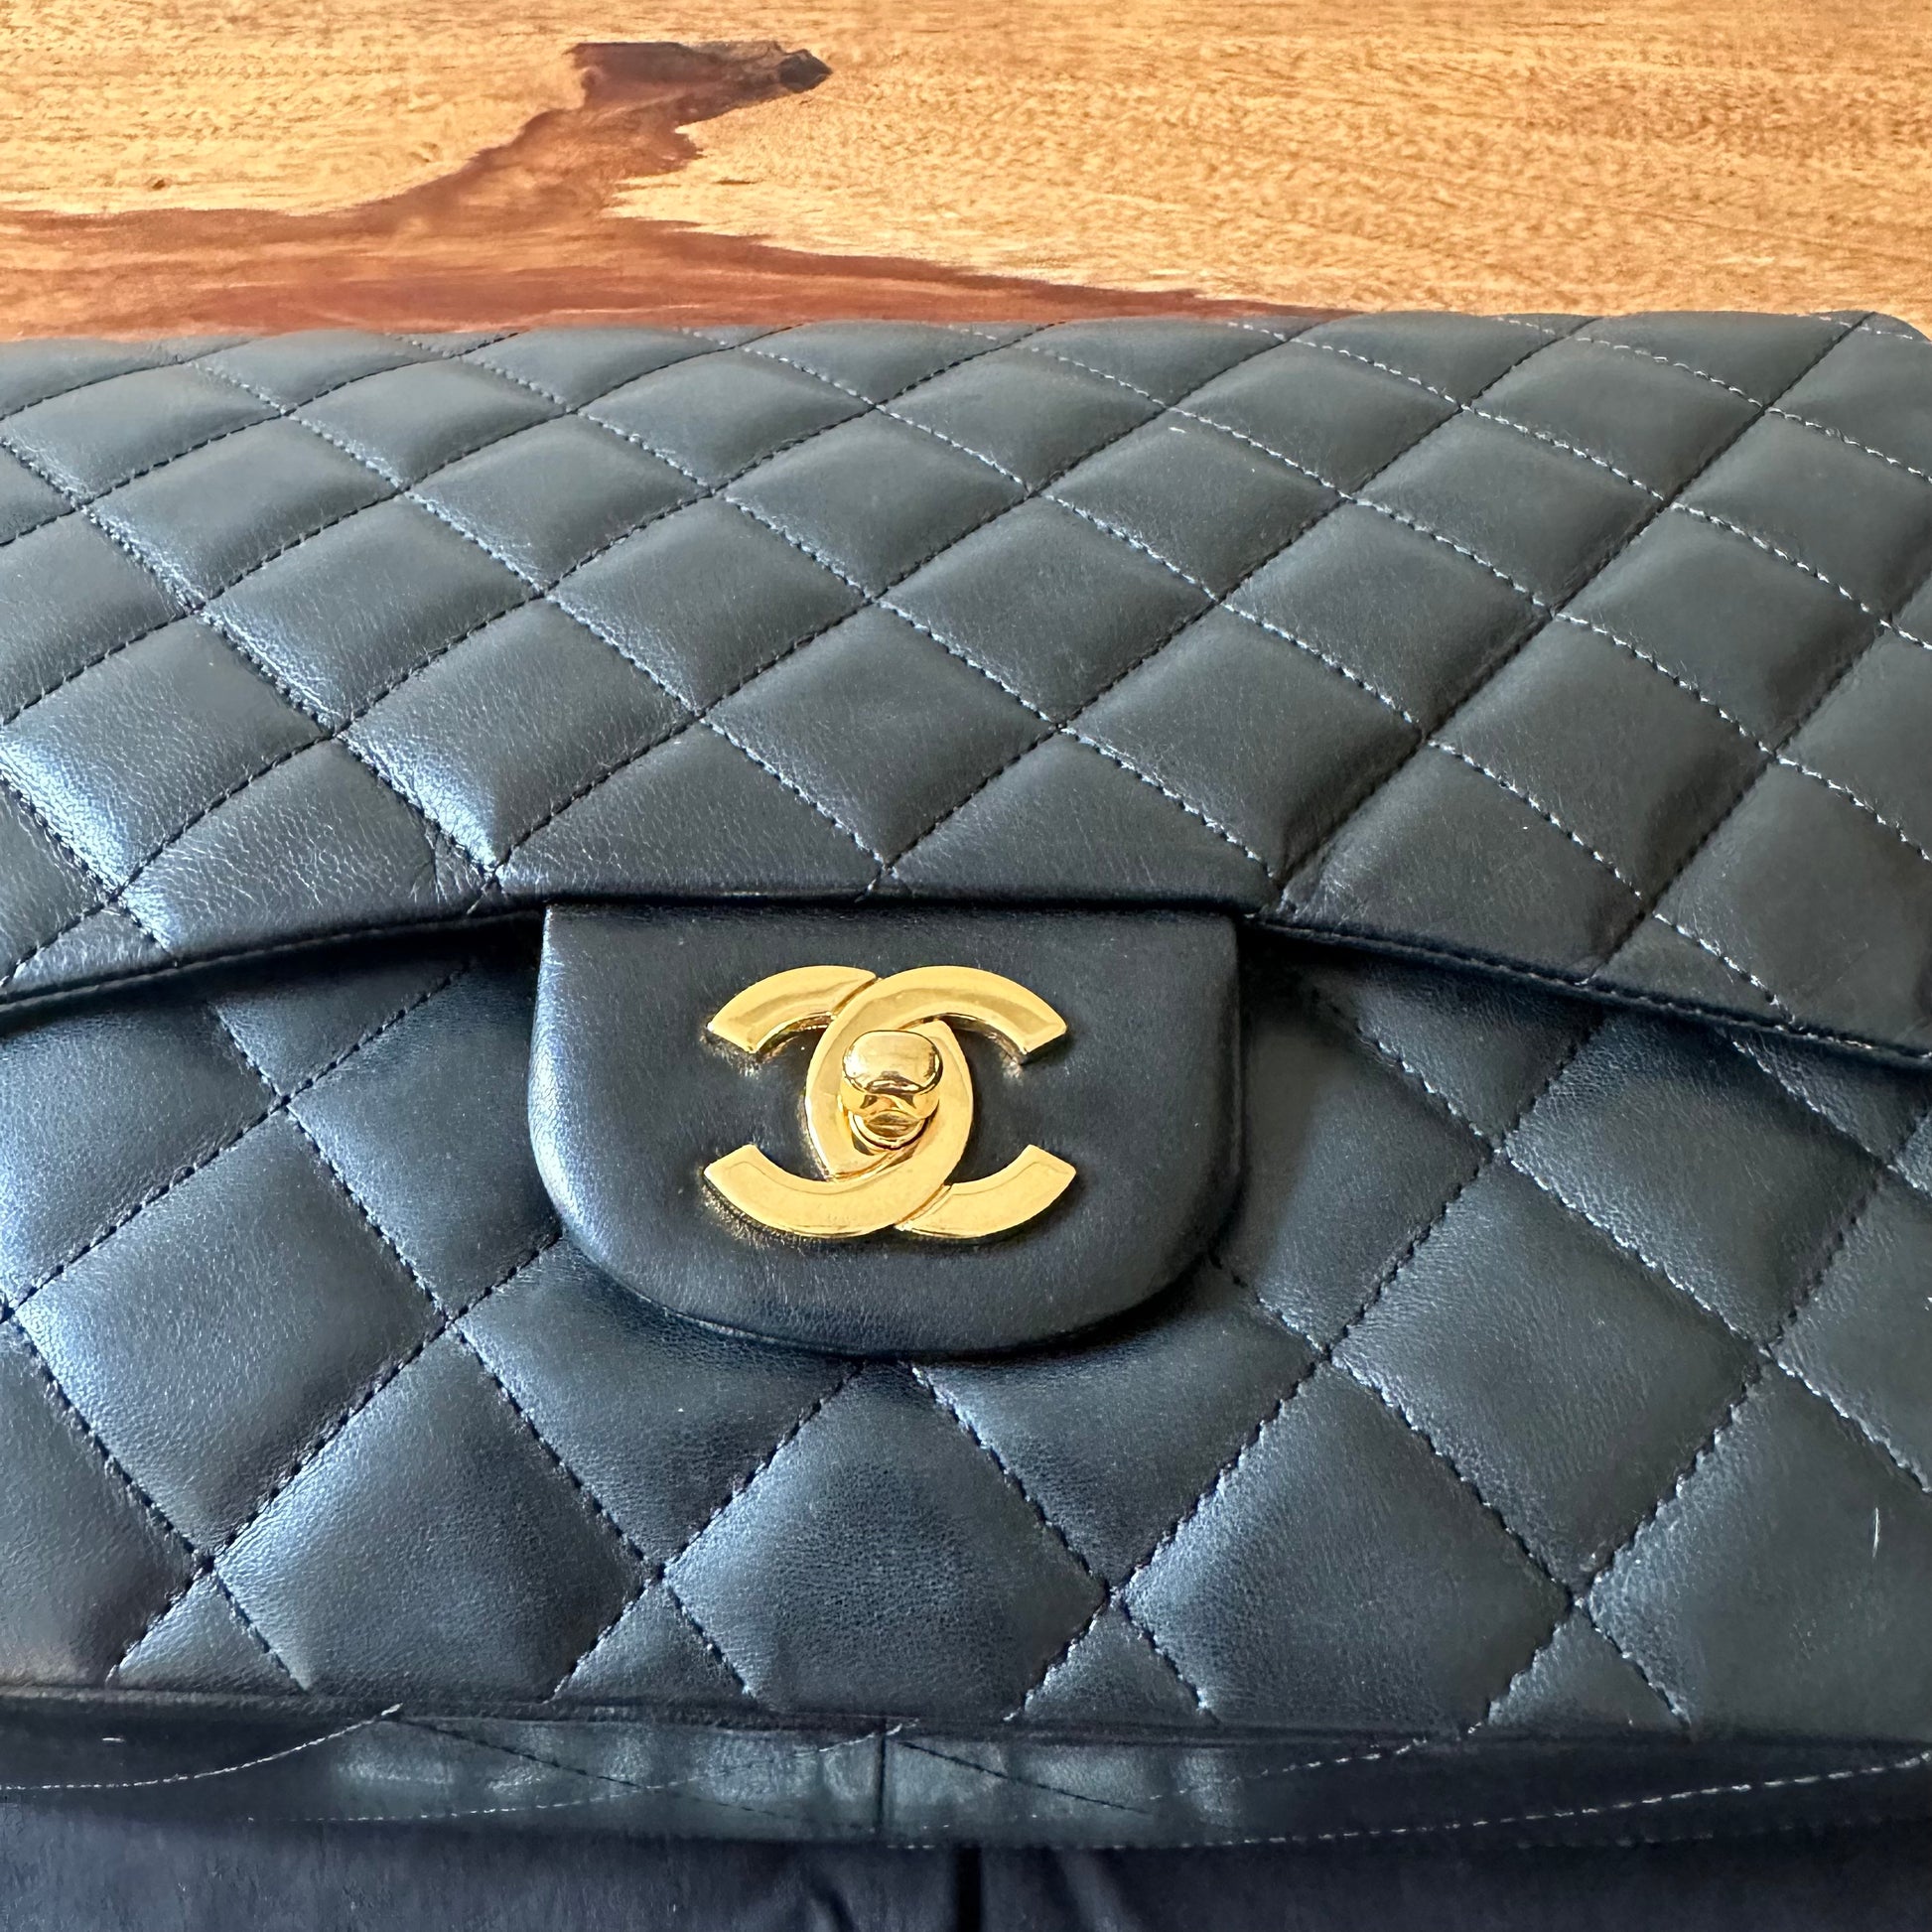 Chanel Jumbo Classic Single Flap Quilted Caviar Light Beige Bag - BOPF